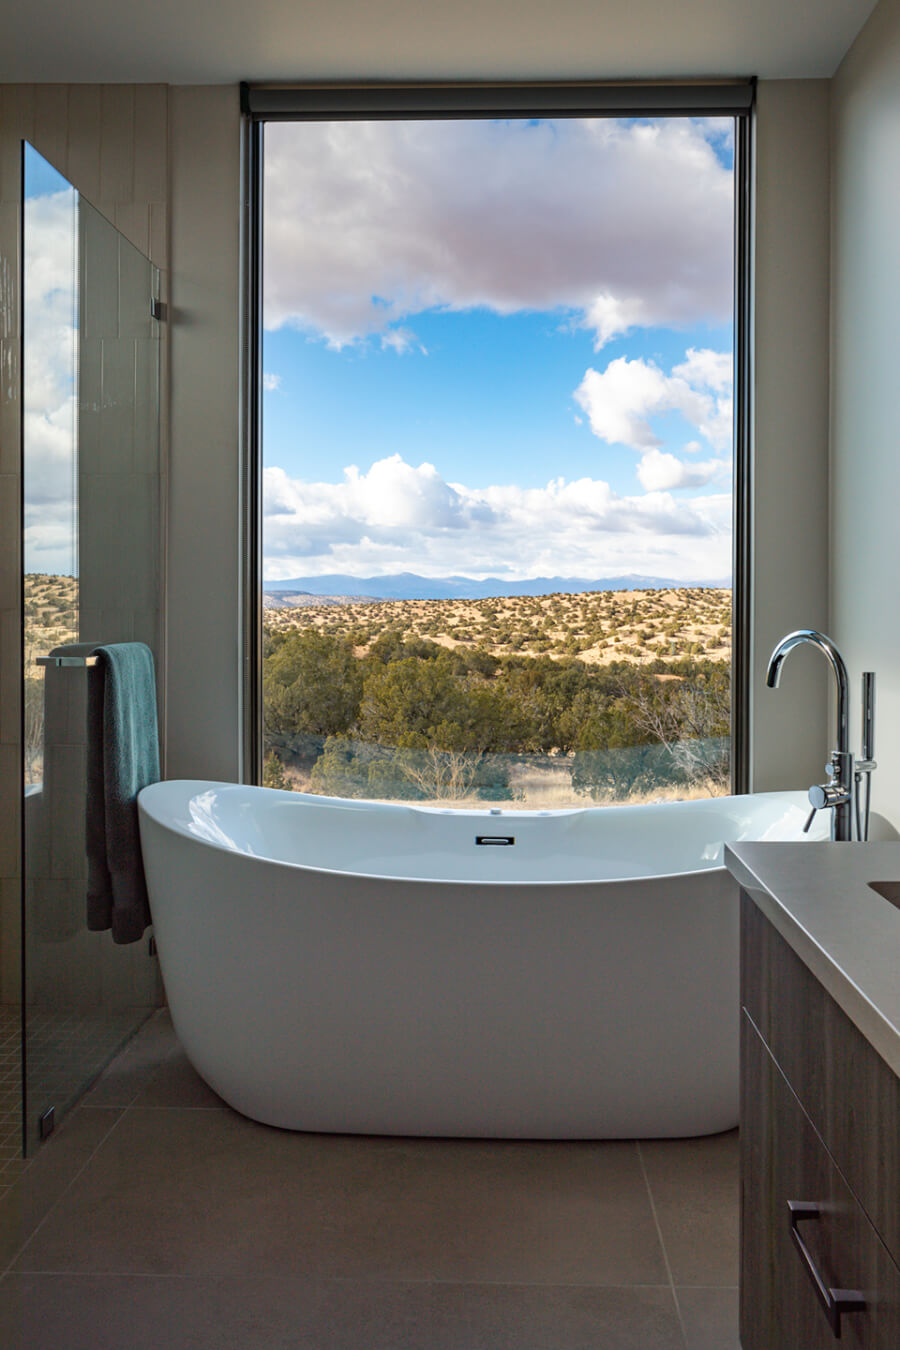 A Santa Fe home designer created a bathroom with a bathtub featuring views of the desert.